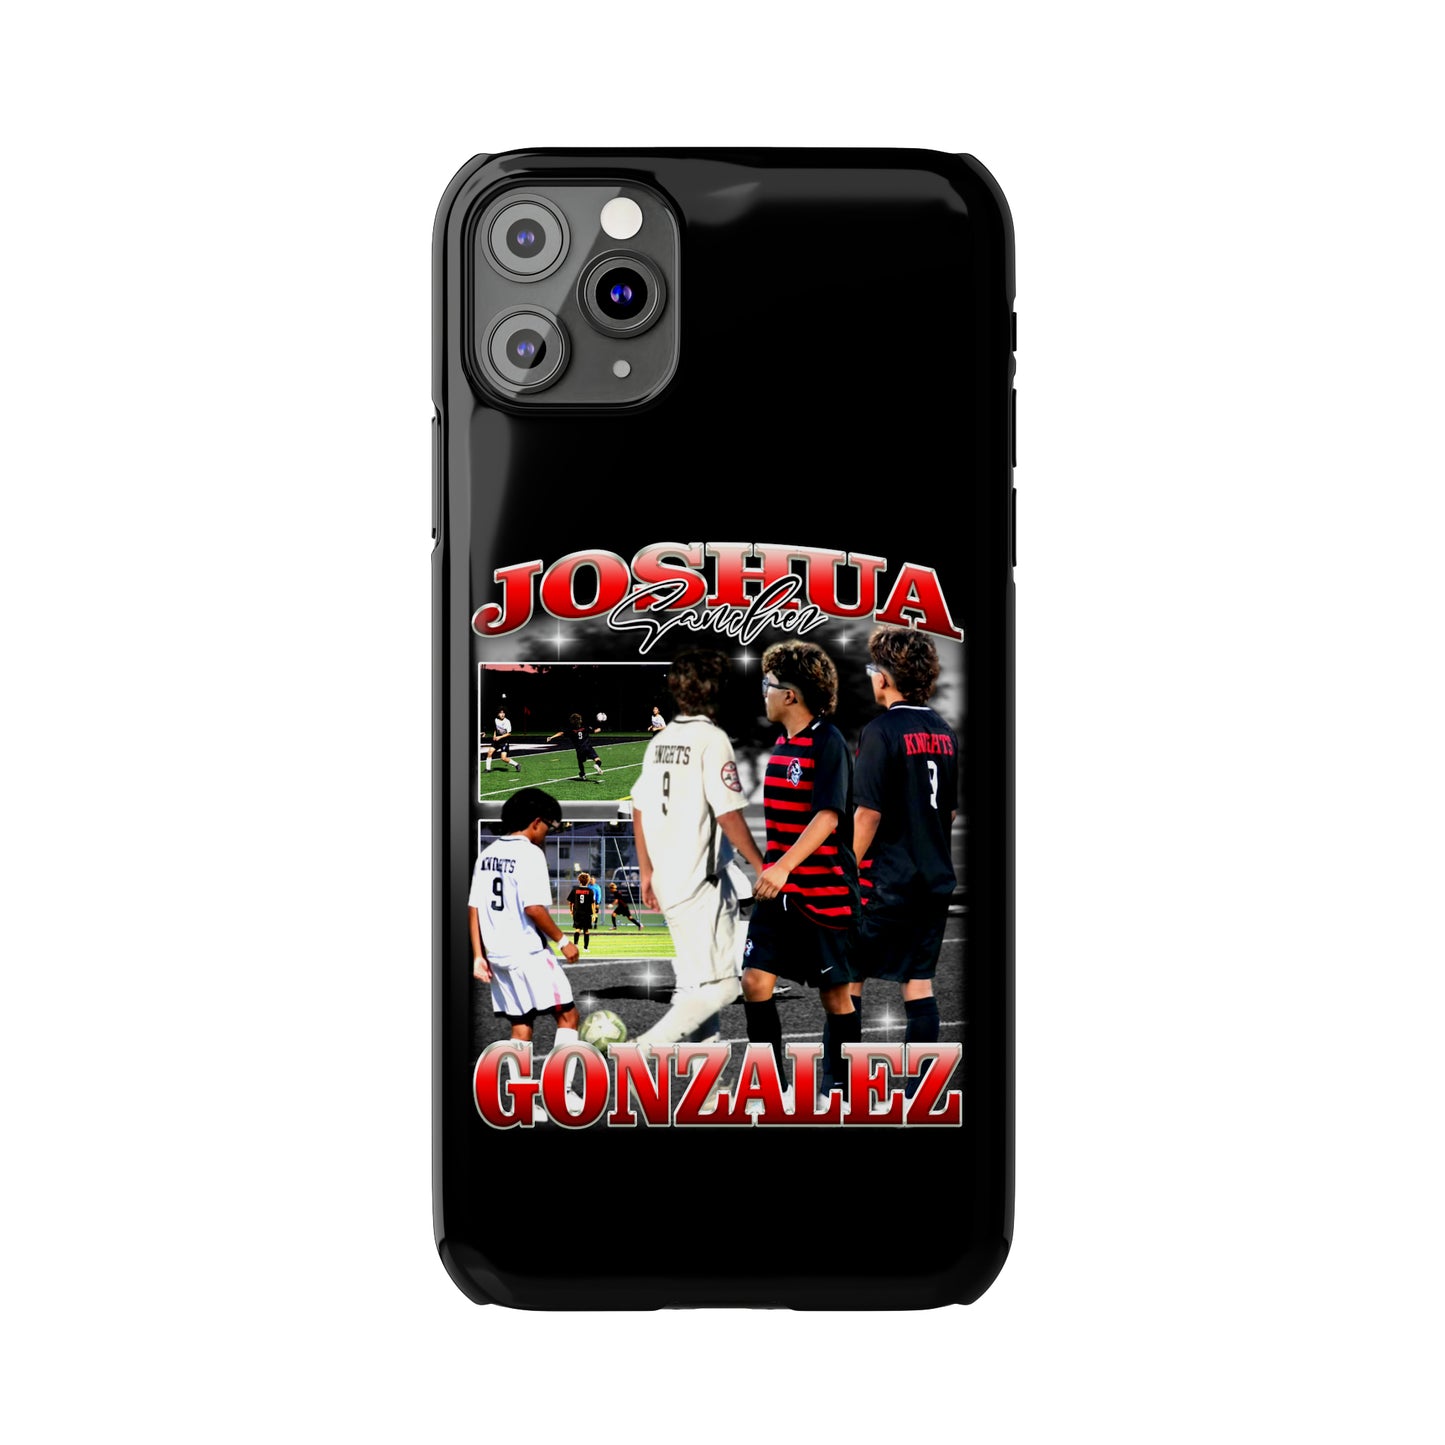 Joshua Sanchez Gonazalez Phone Case